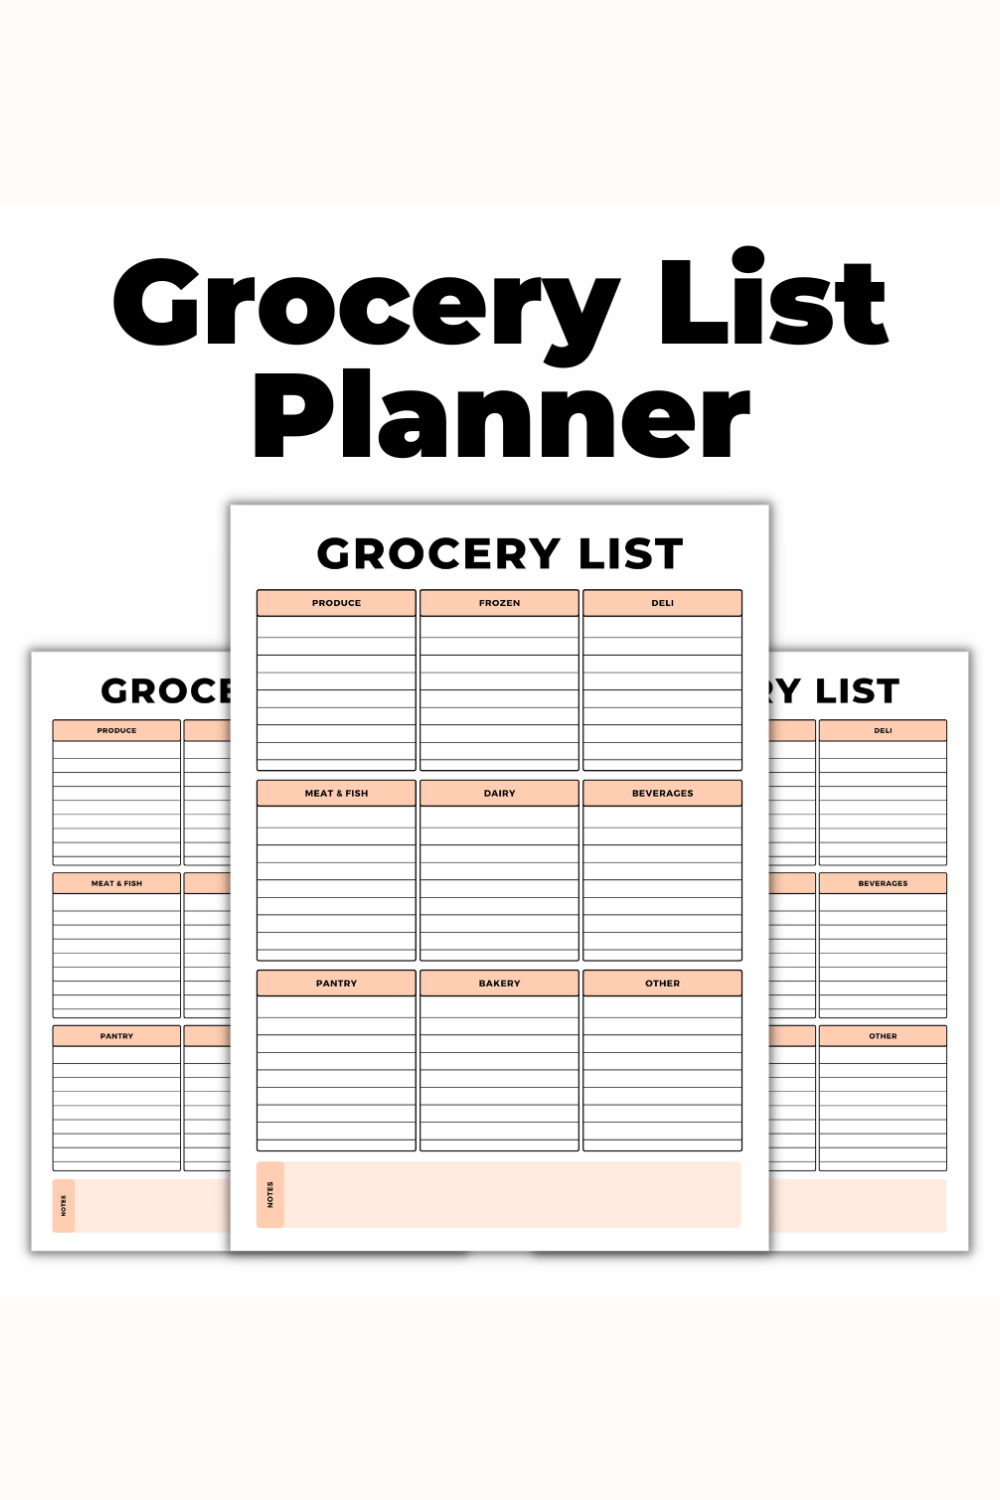 PACK PDF 3 templates : planner, semainier & to do list - design